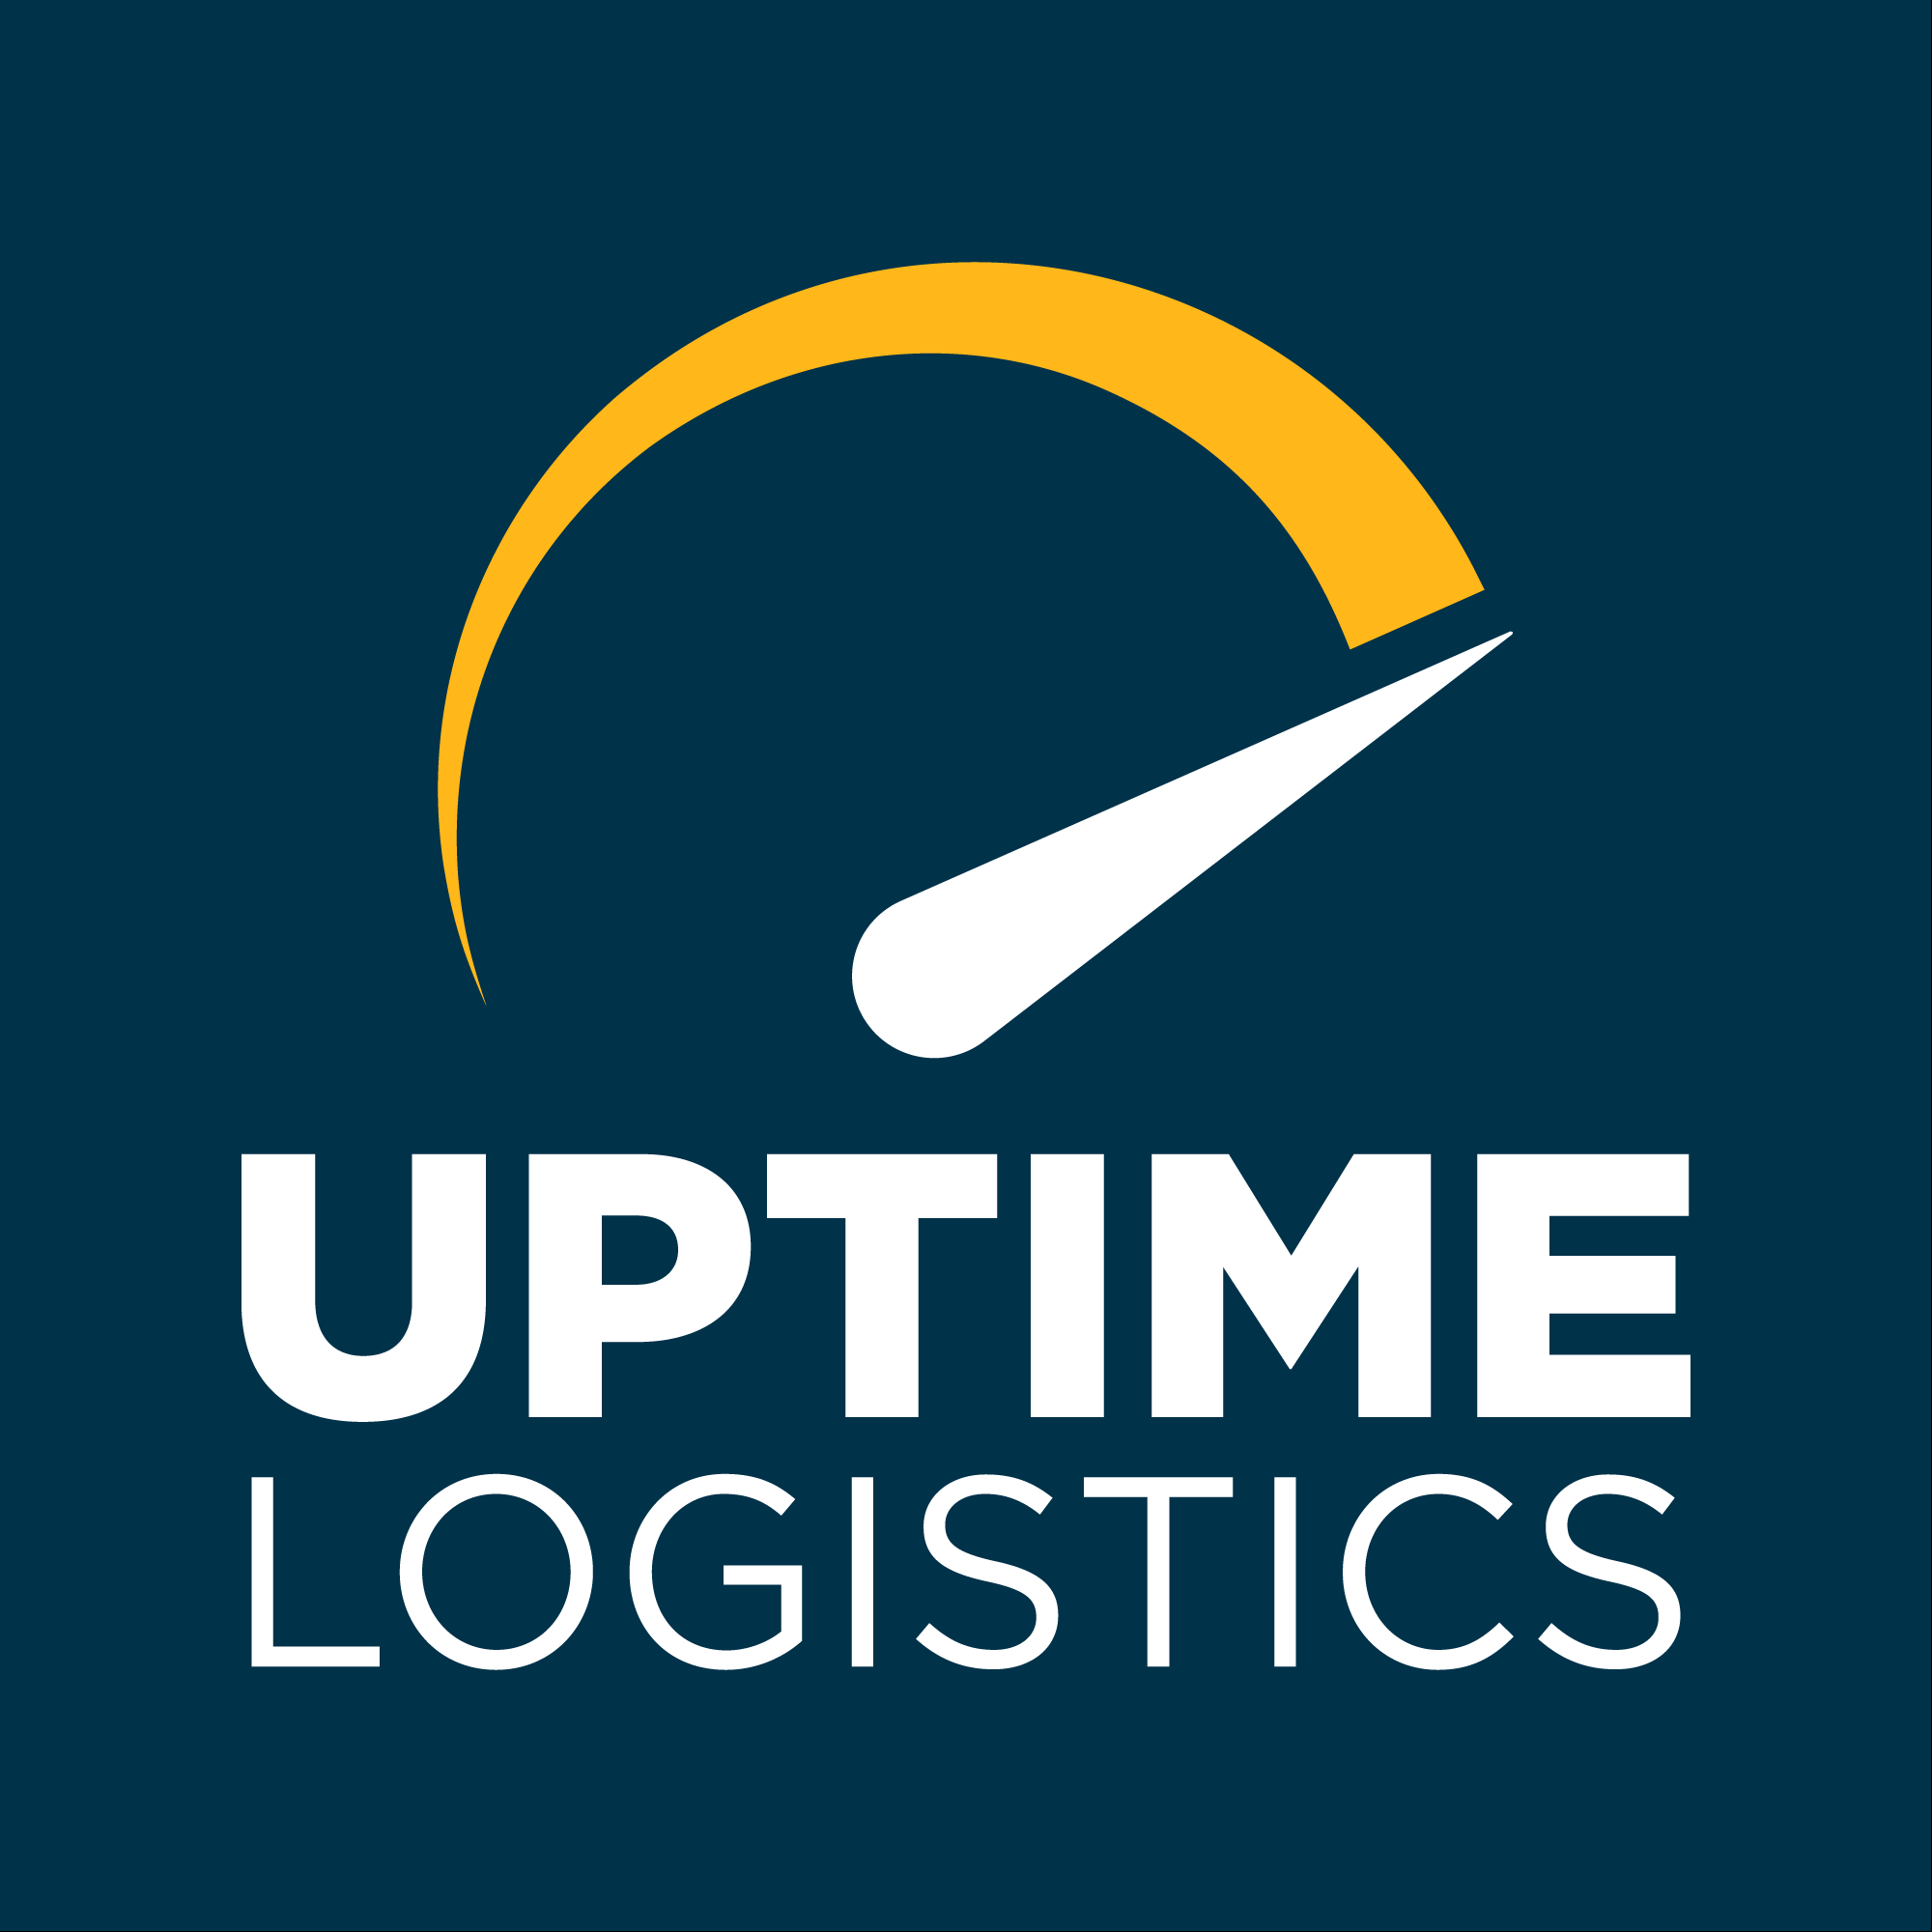 Uptime Logistics